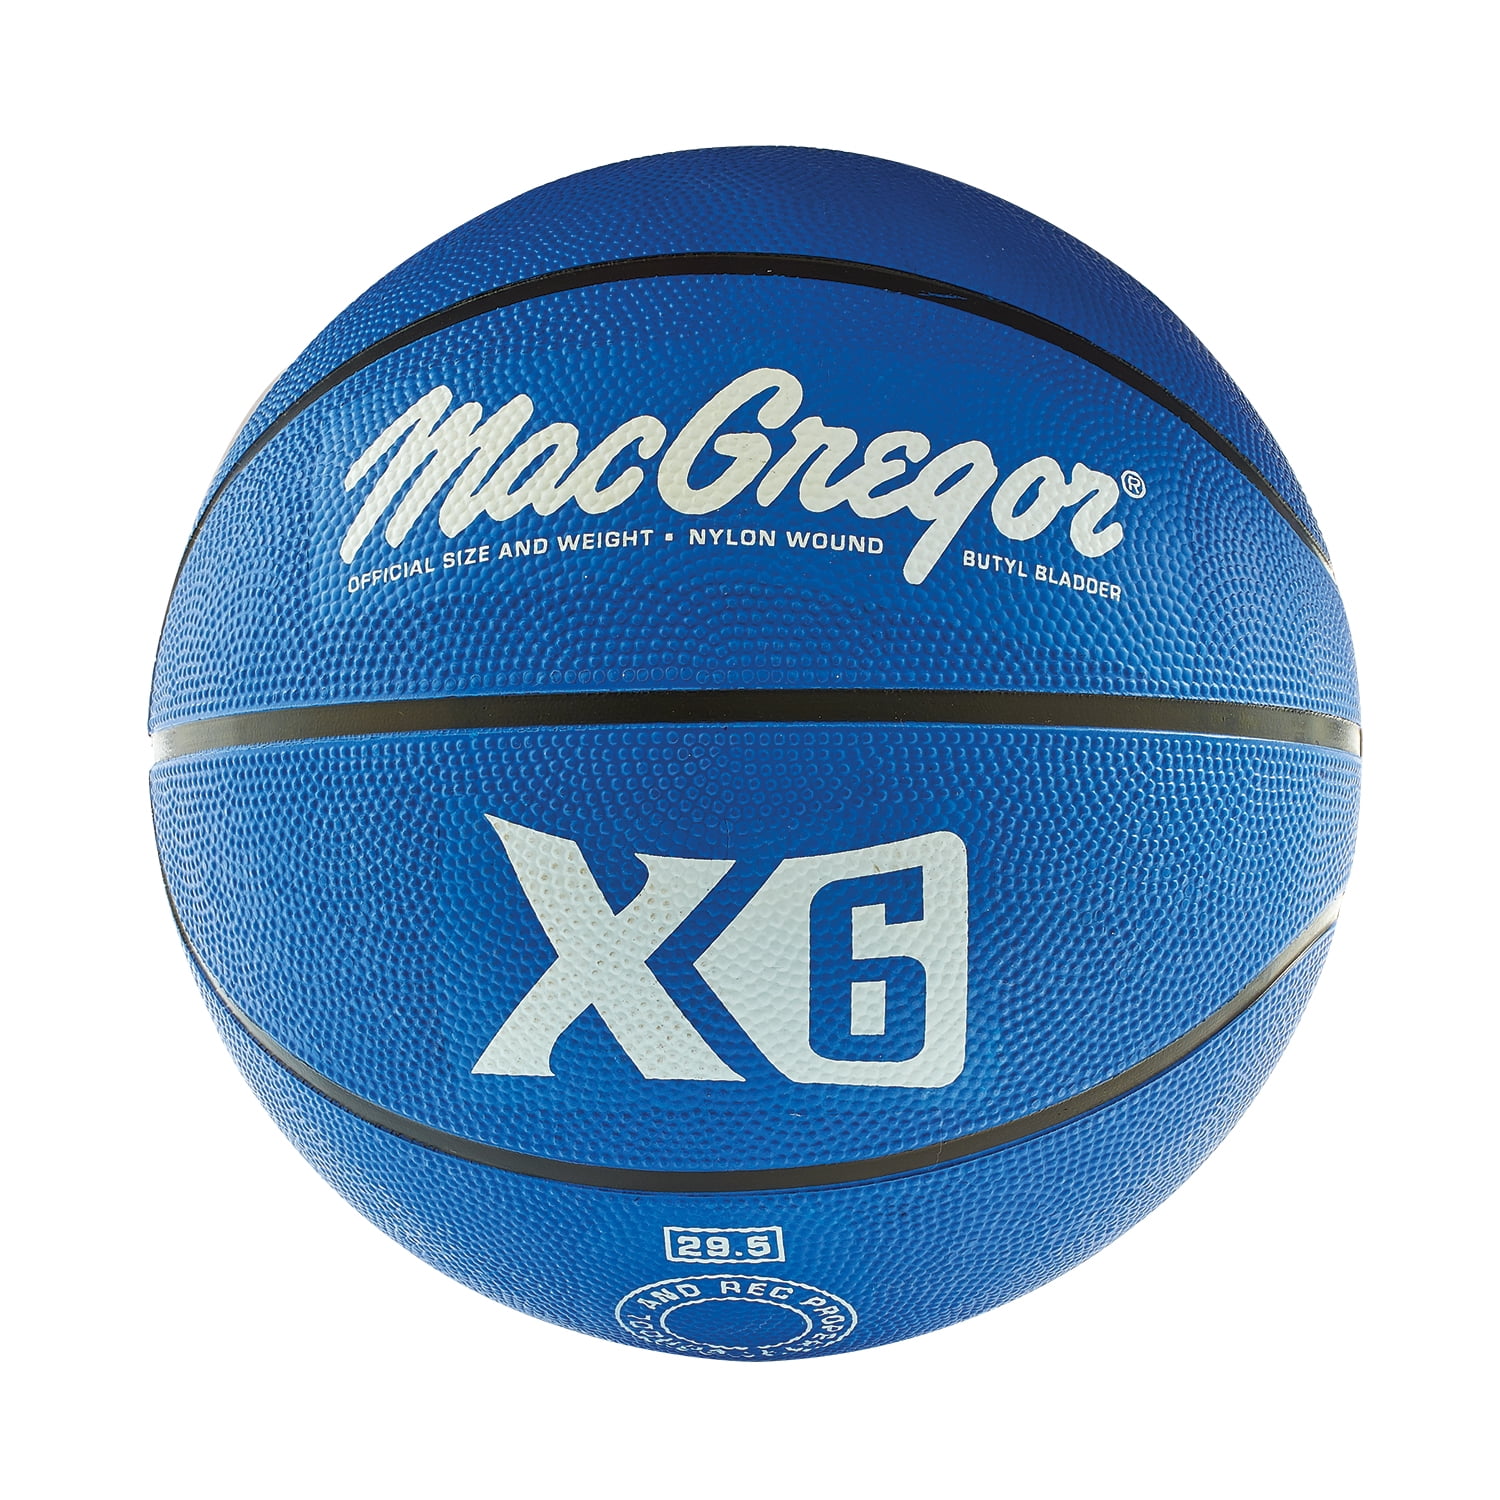 MacGregor Rubber Basketball Official Size 29.5 